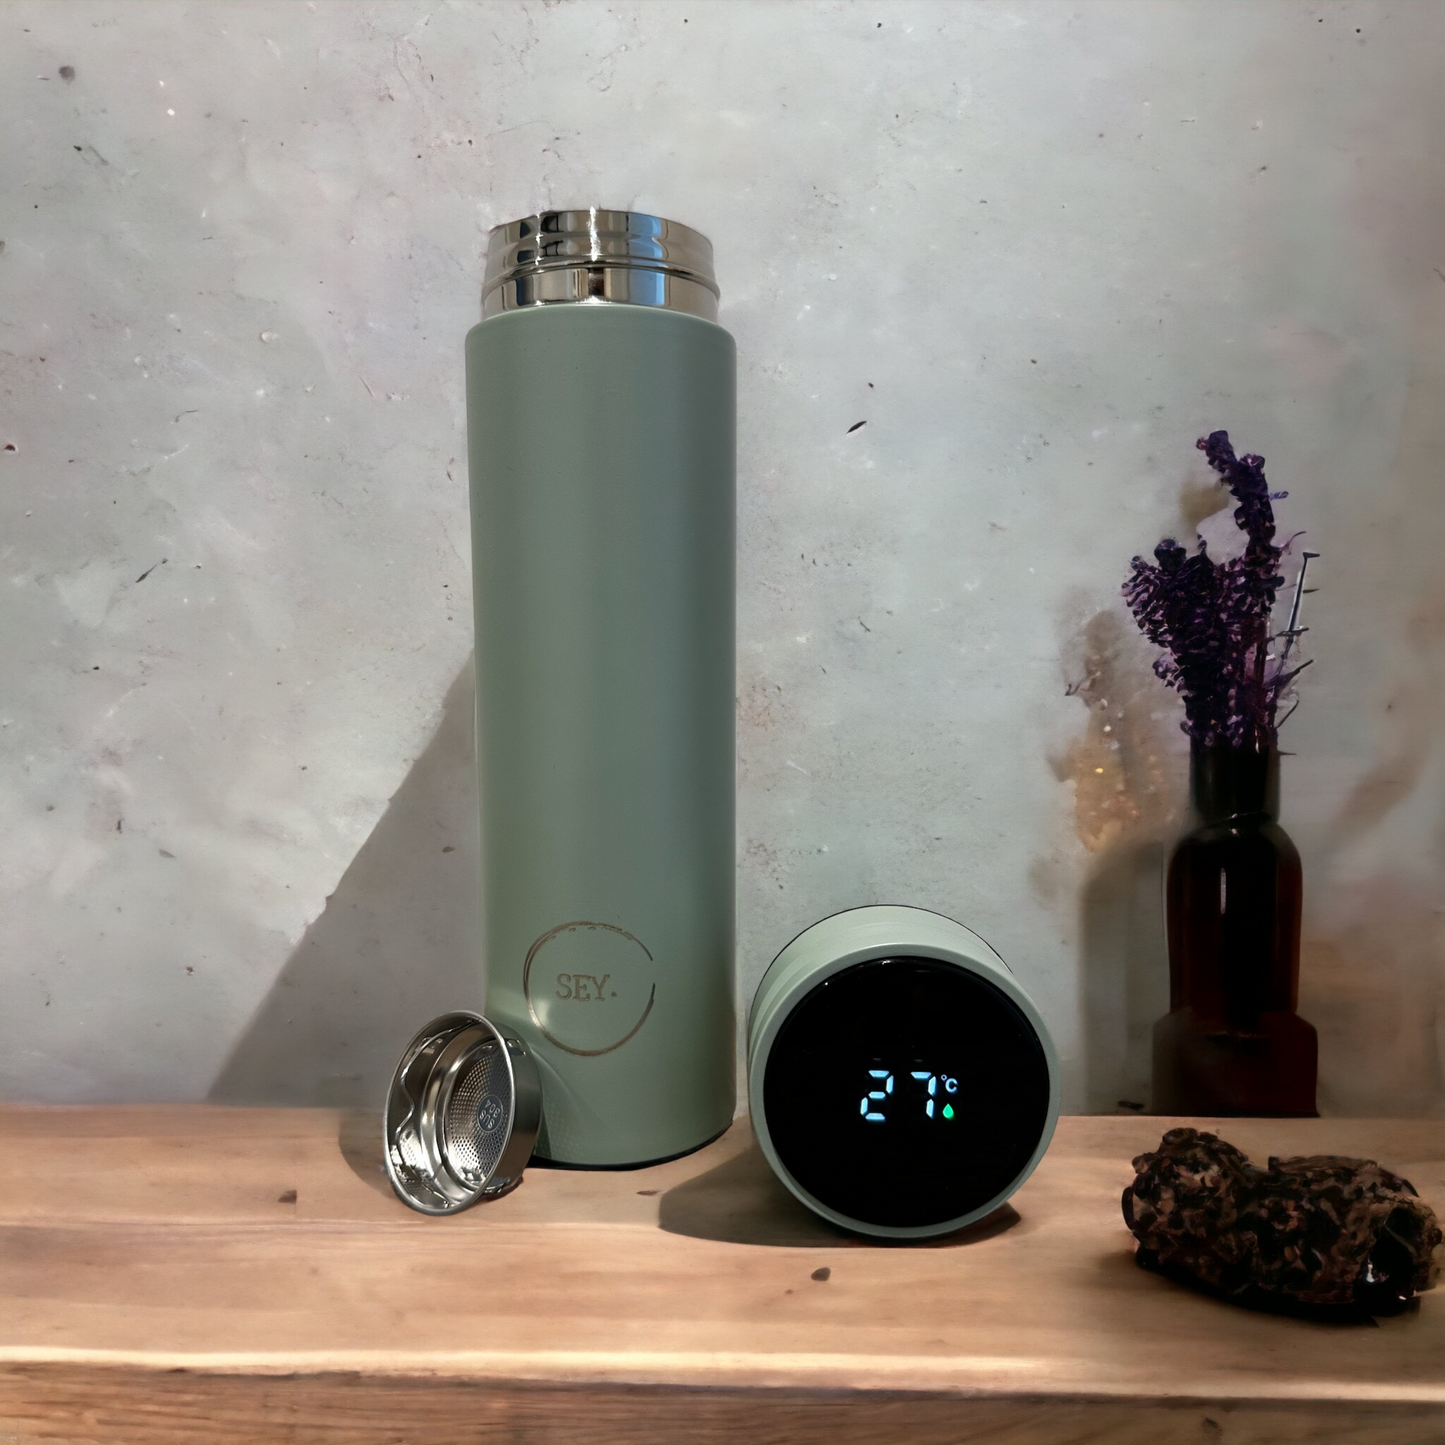 LED Smart Digital Display Insulated Flask